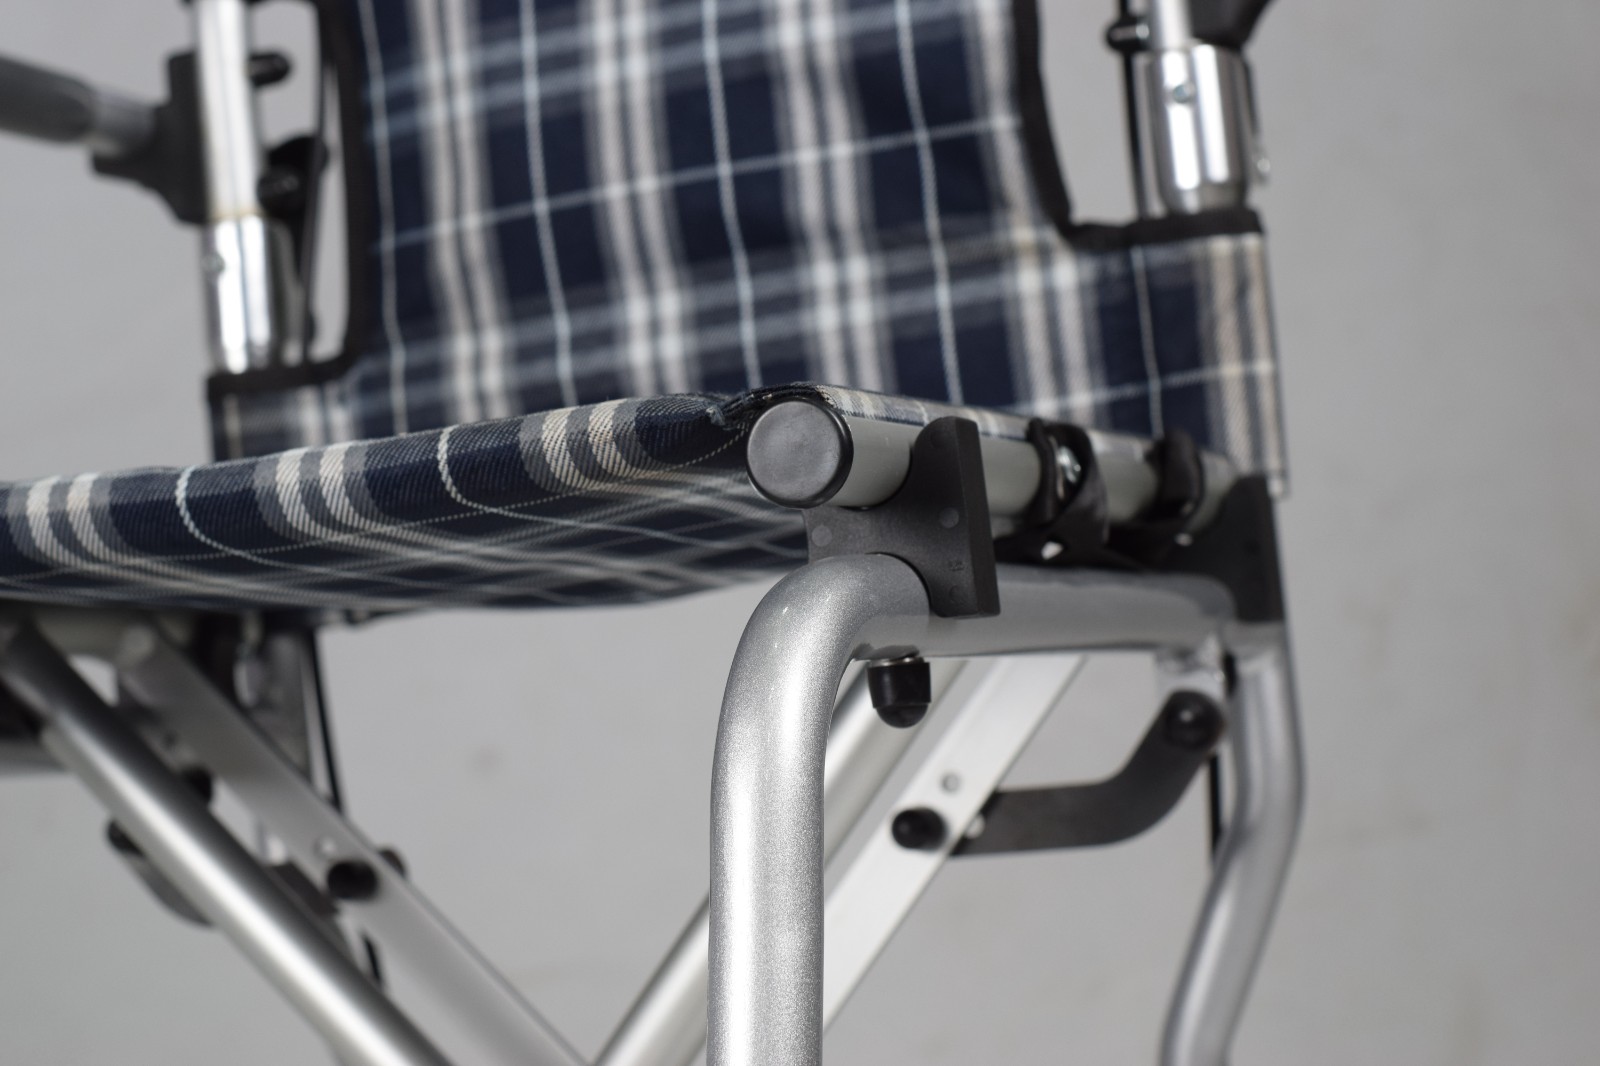 Manual aluminum wheelchairs